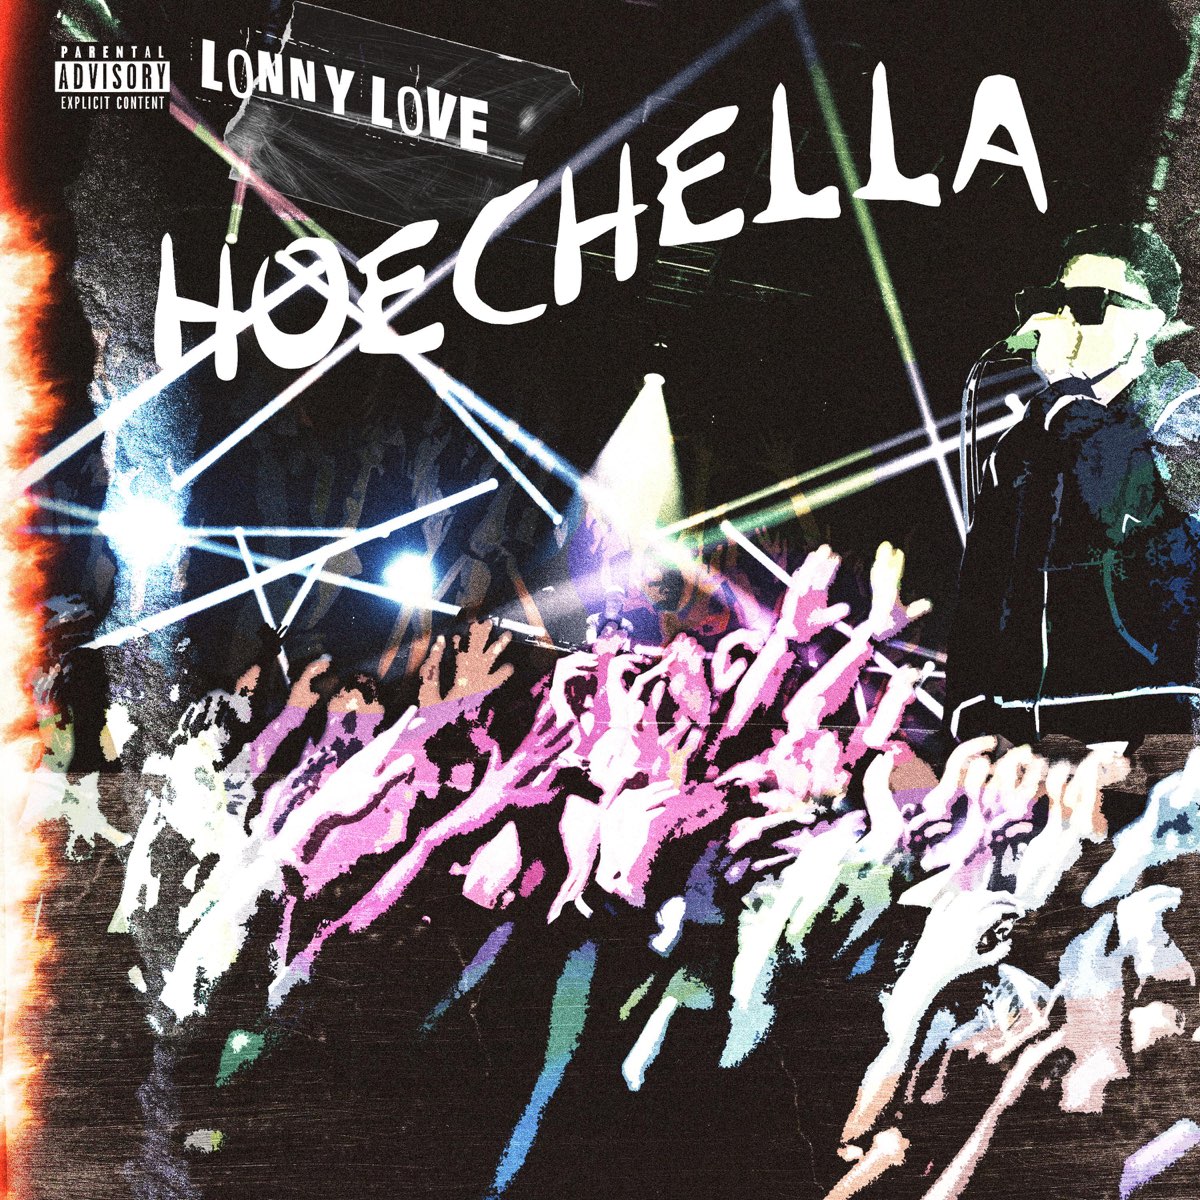 ‎Hoechella - Album by Lonny Love - Apple Music